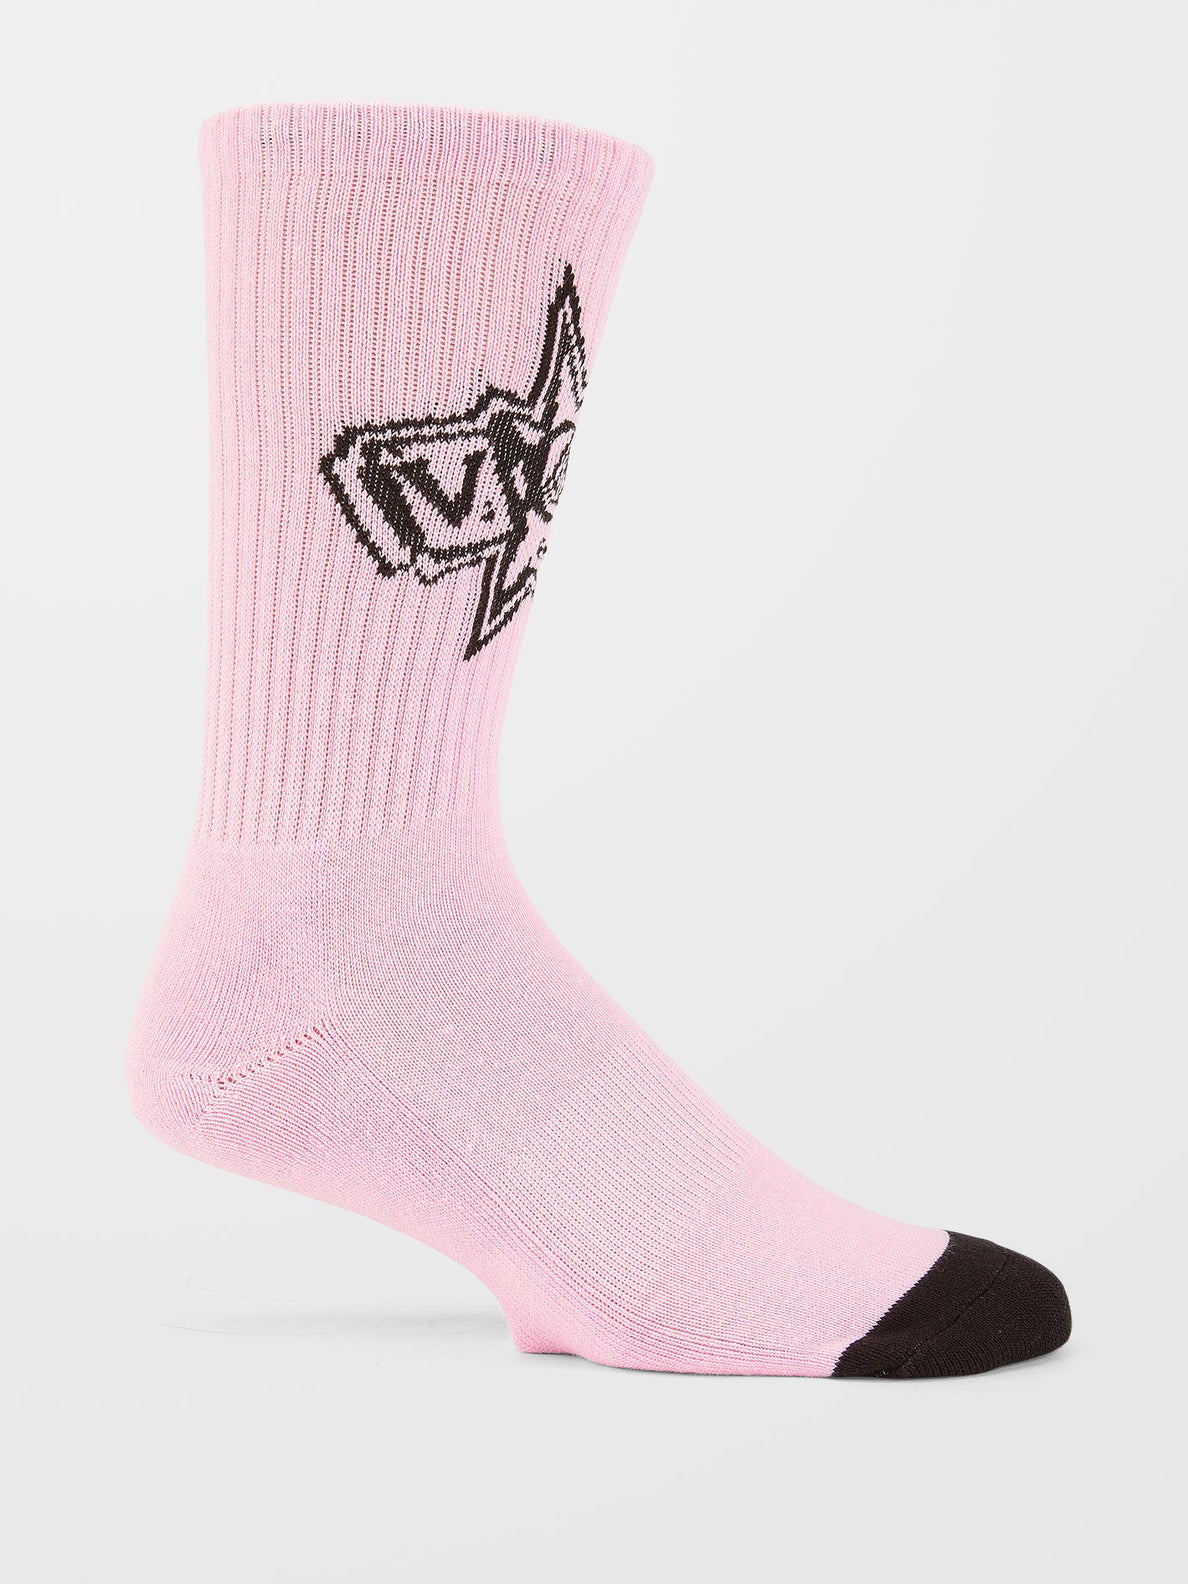 Volcom V Ent Socke Premium Reef Pink | Meistverkaufte Produkte | Neue Produkte | Neueste Produkte | surfdevils.com